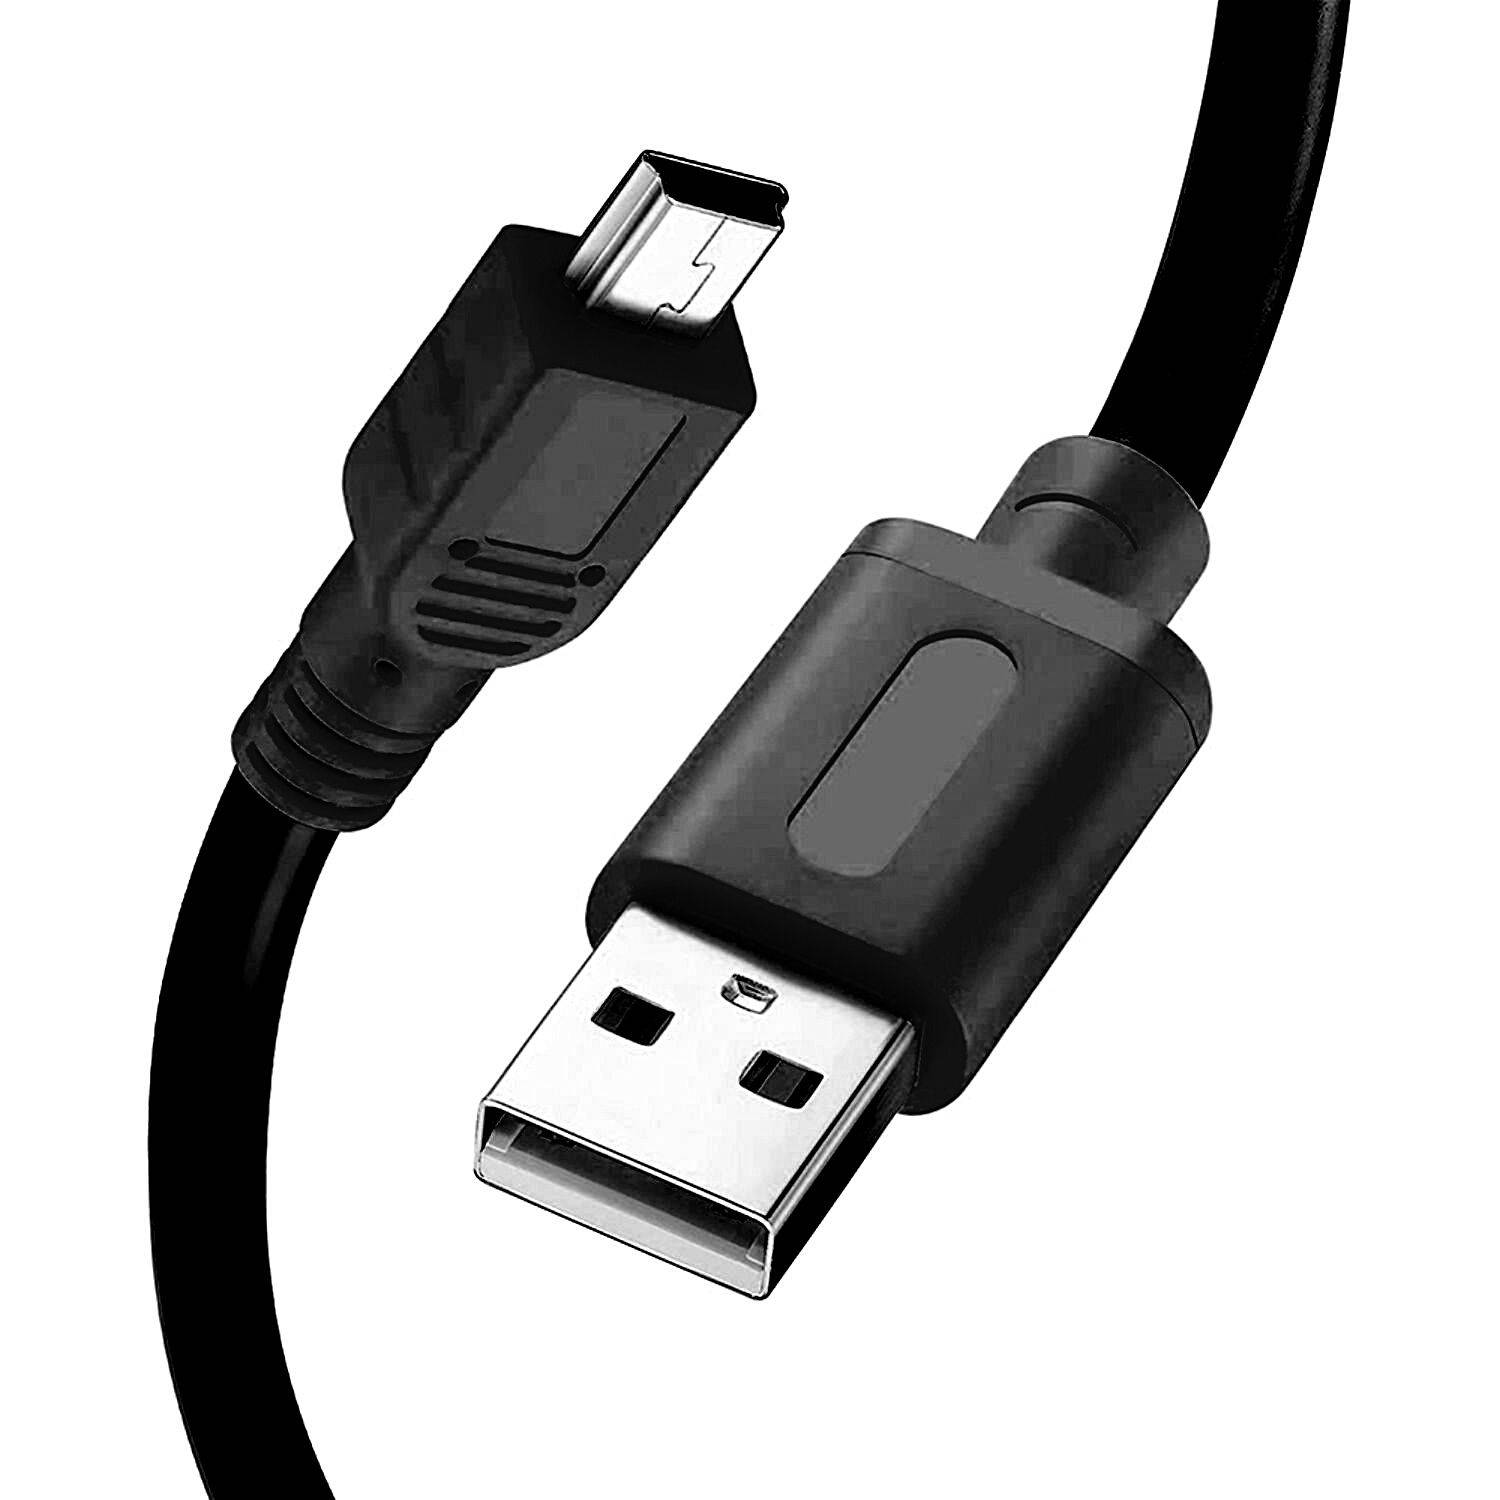 CABLE EXTENSION USB 3.0 DE 5 METROS MACHO A HEMBRA TRAUTECH